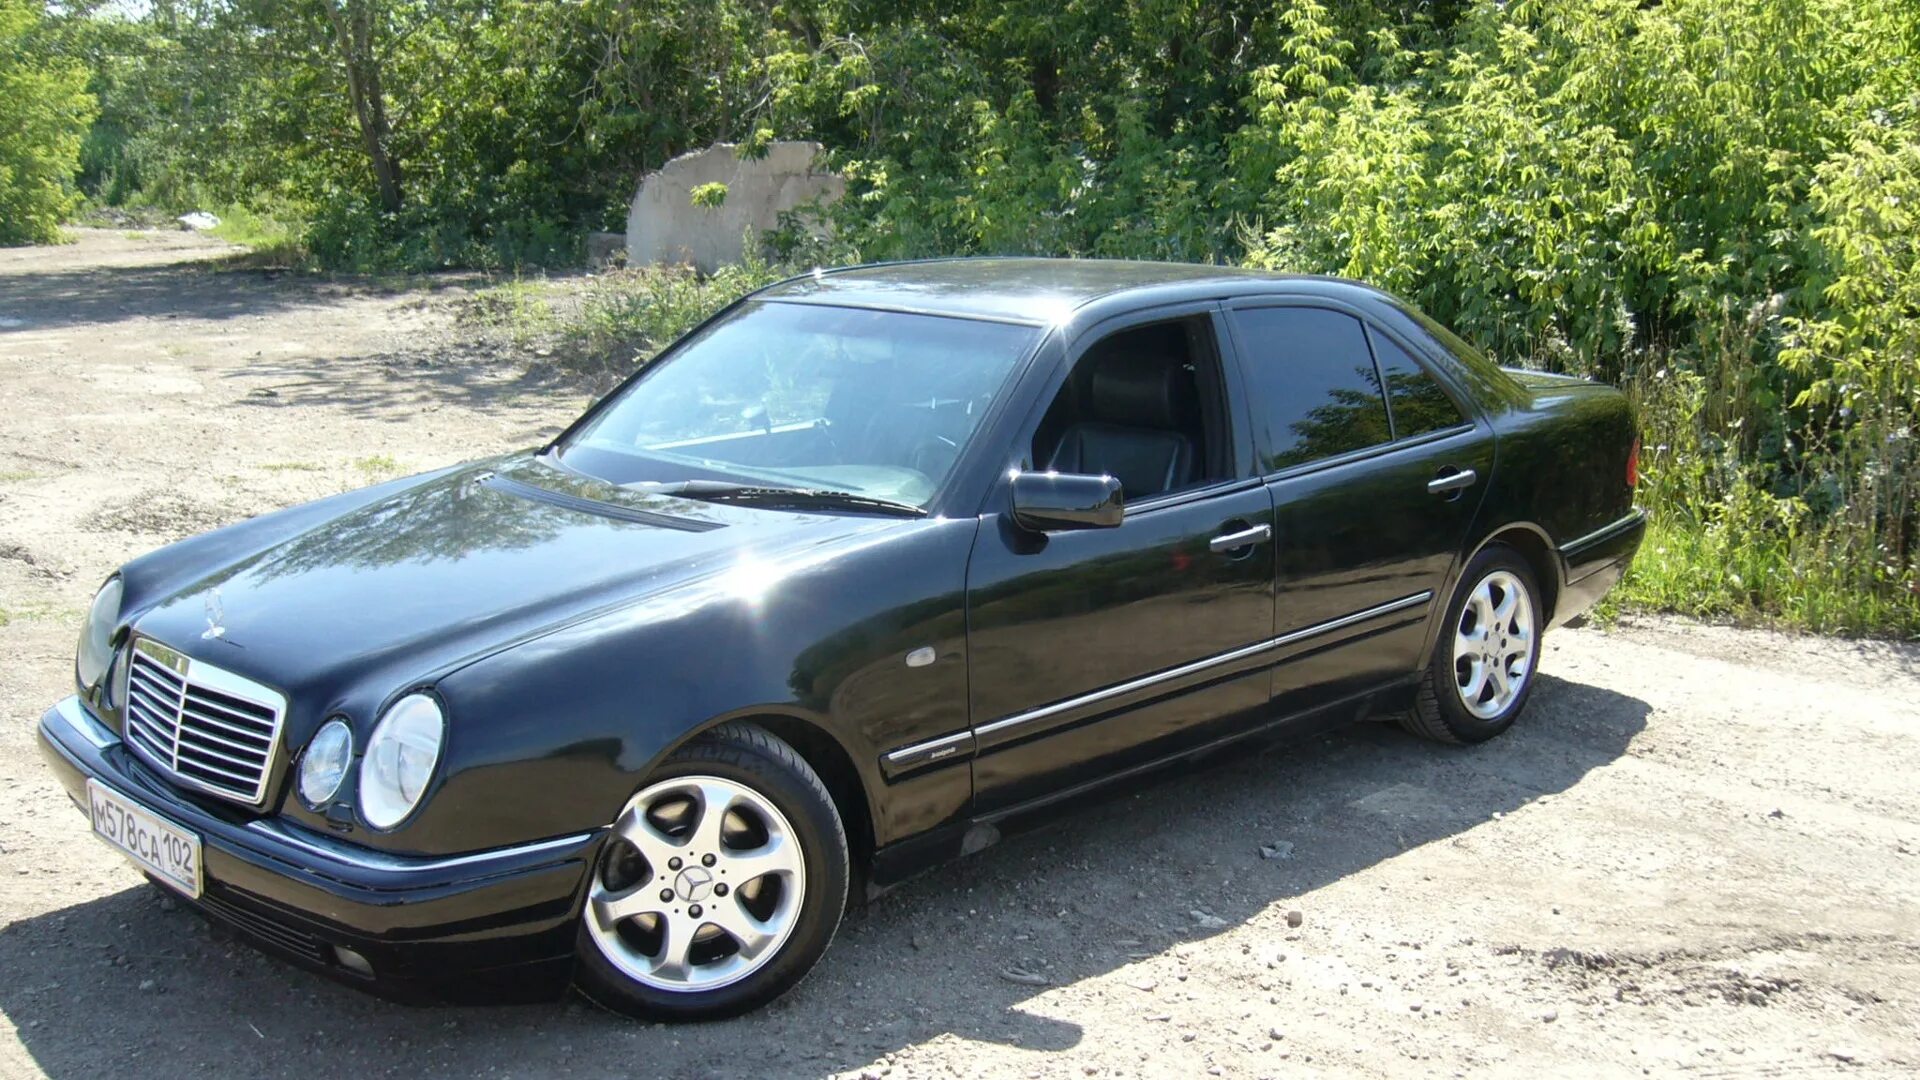 Mercedes e class 1997. Мерседес с класс 1997. Мерседес 1997 года. Мерседес мерин 1997. Купить мерседес 1997